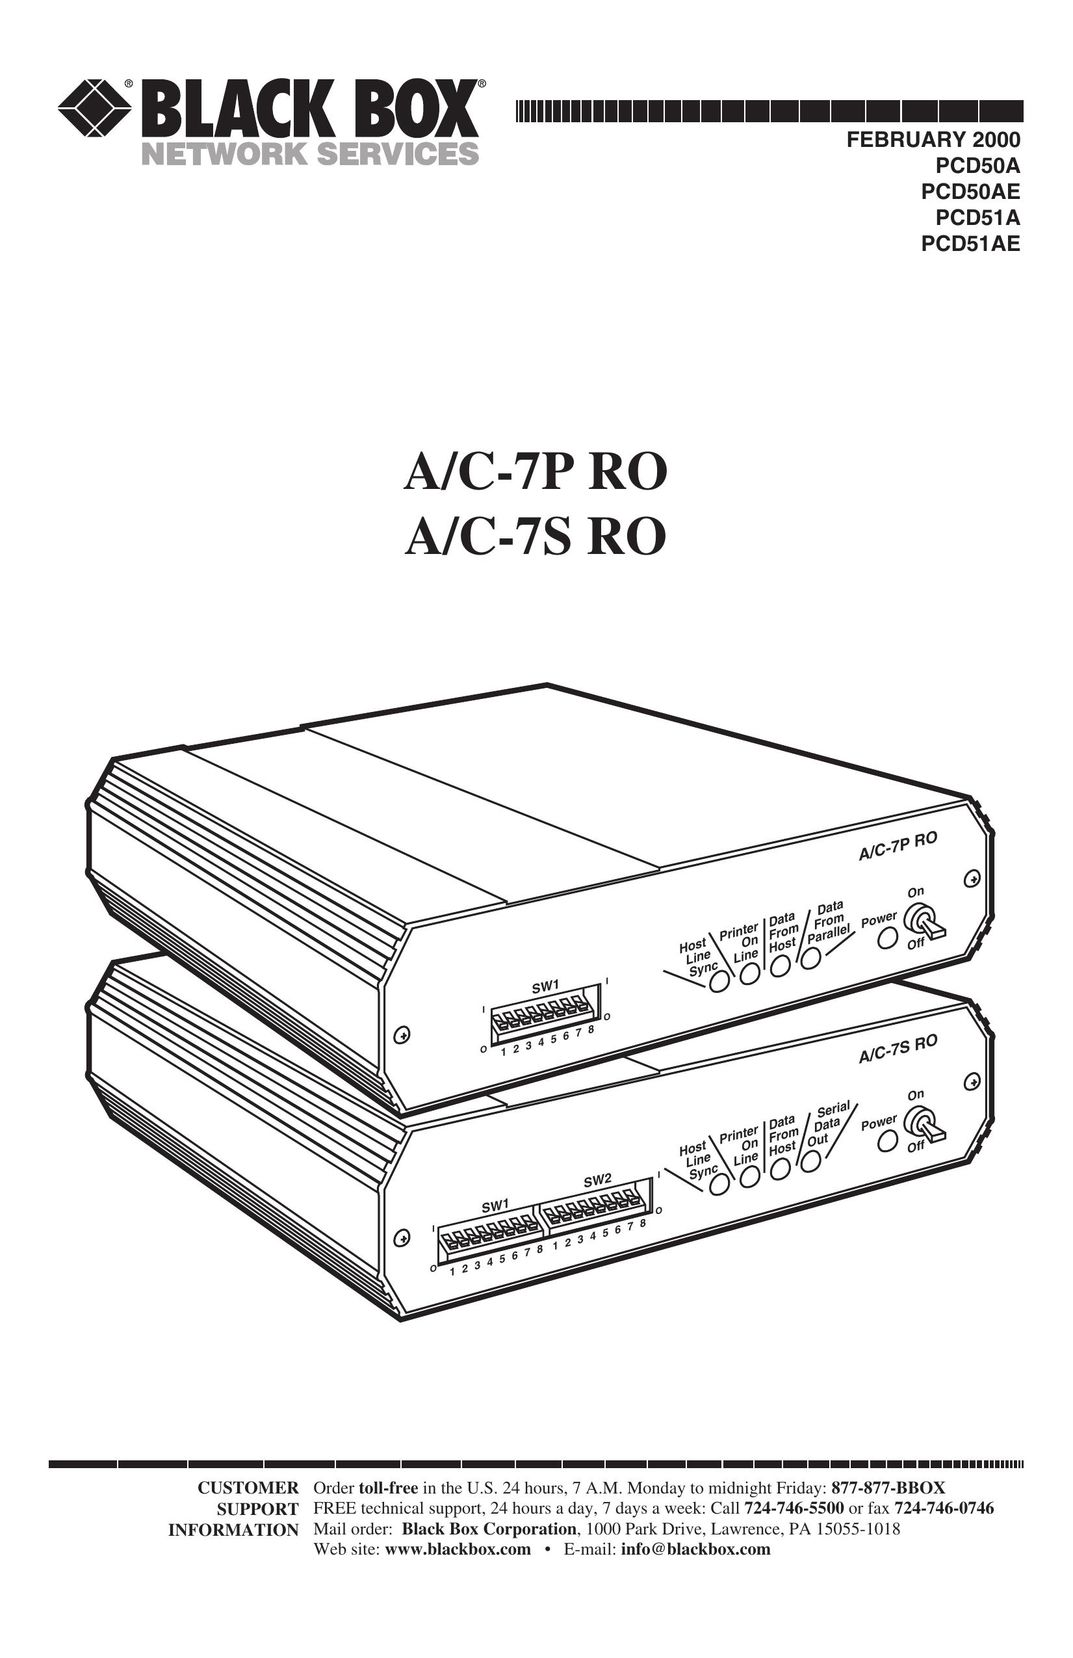 Black Box A/C-7S RO Cable Box User Manual